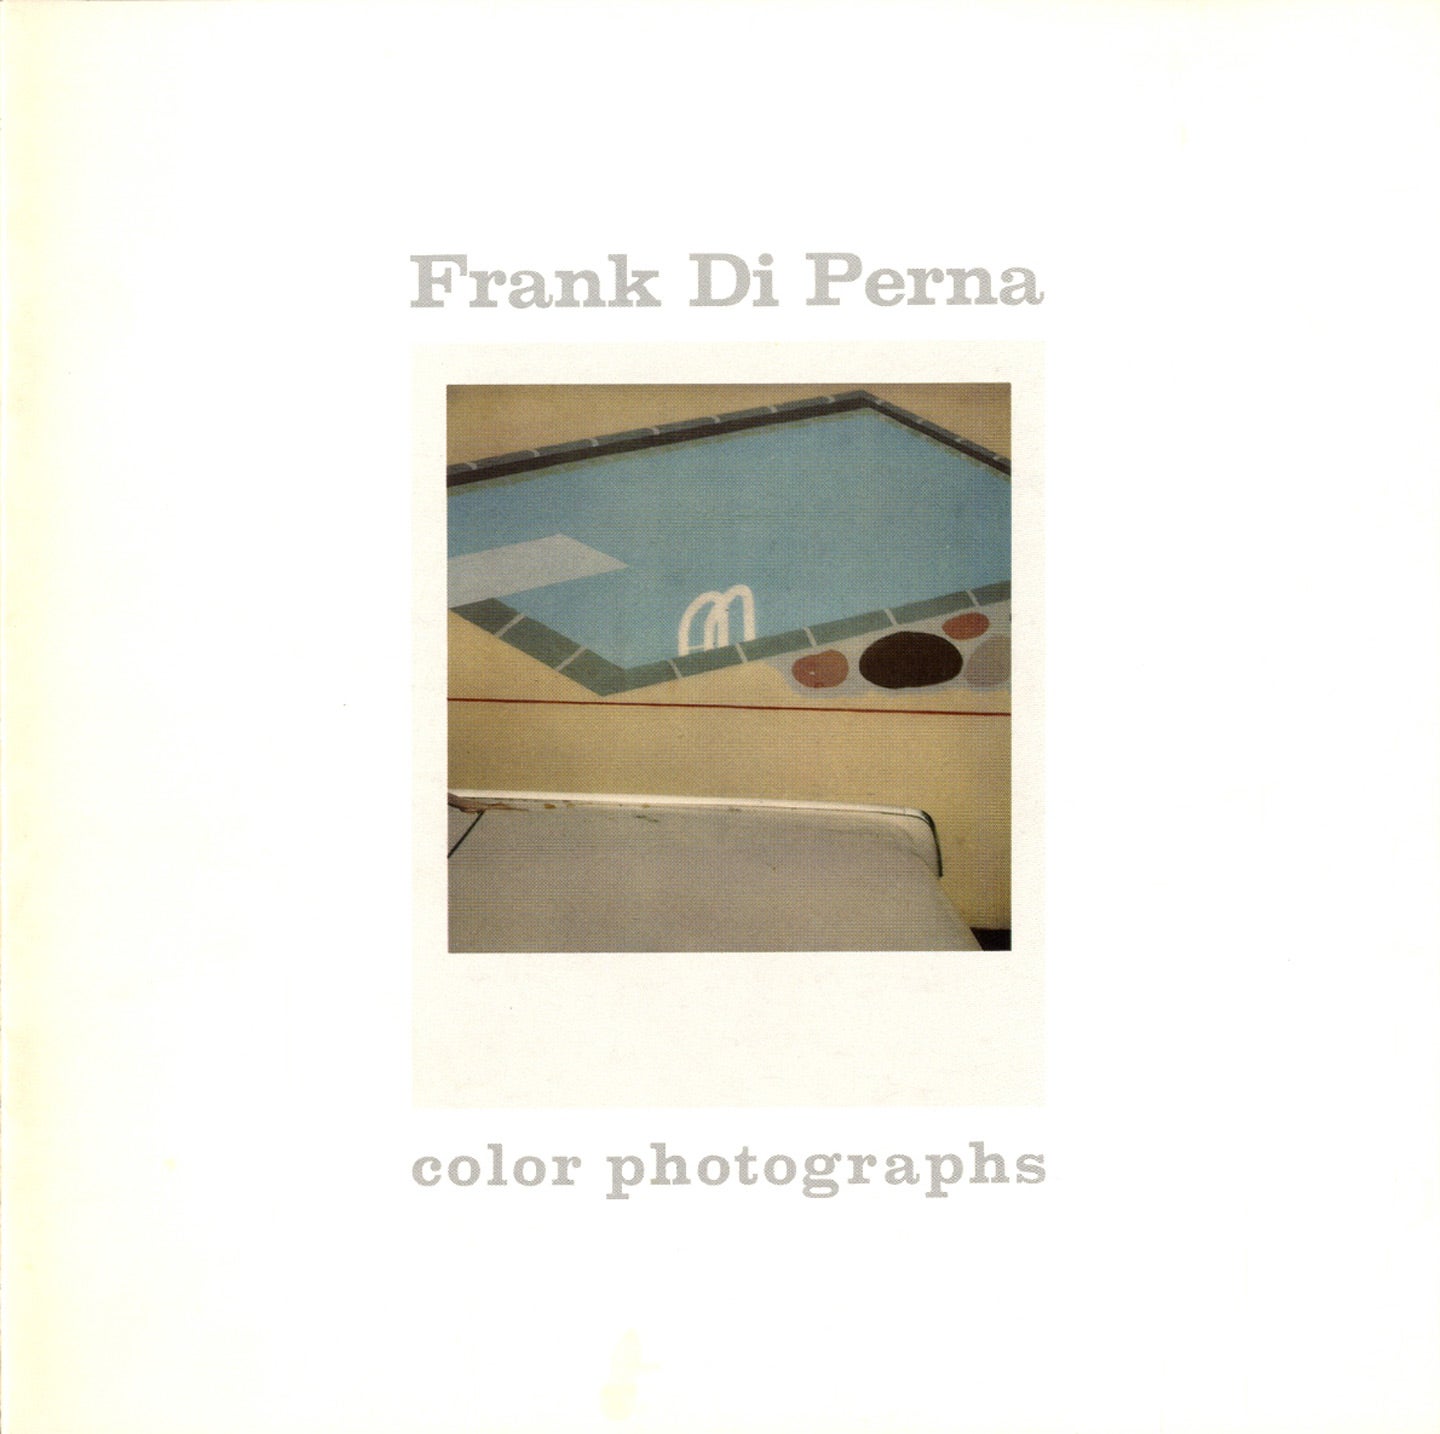 Photography at the Corcoran Series: Frank DiPerna: Color Photographs, June 4 - July 17, 1977